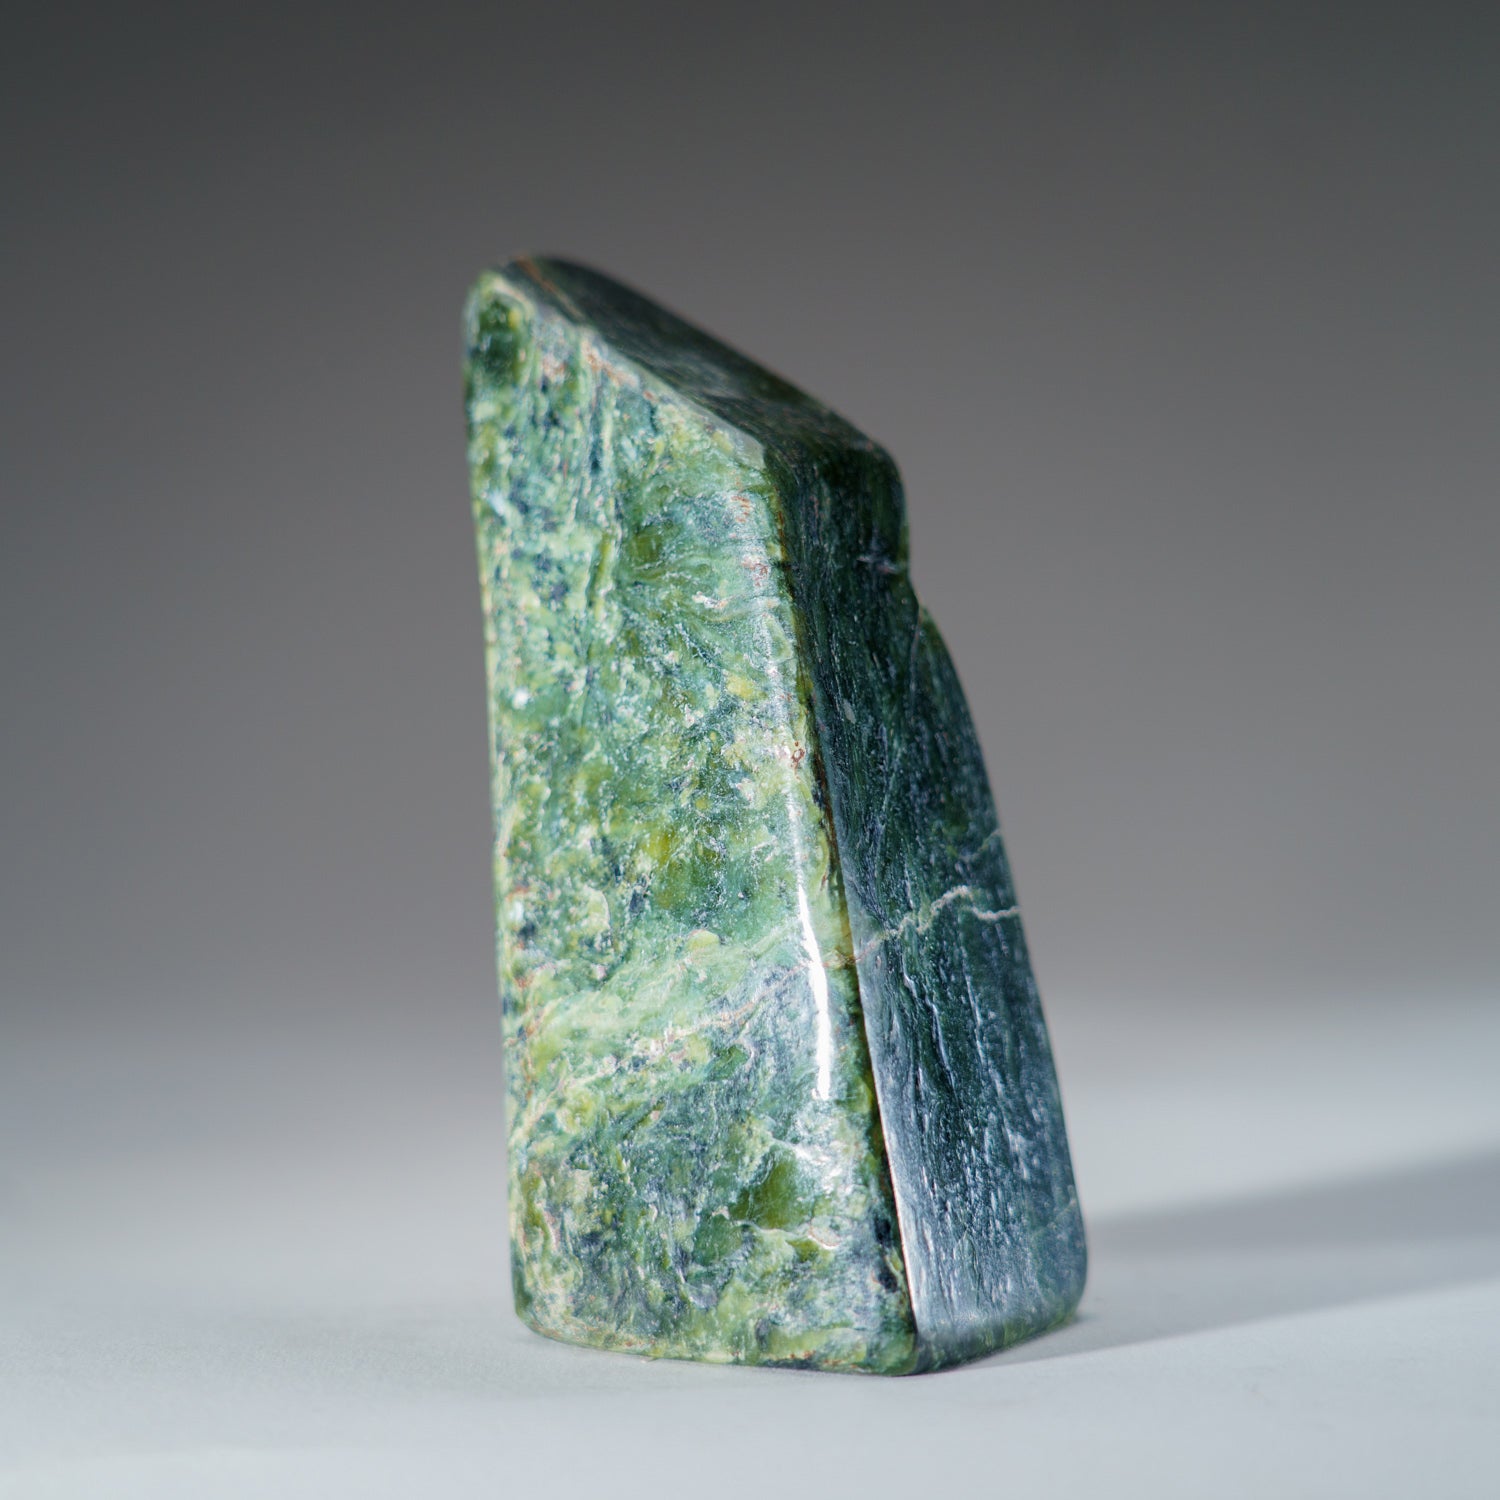 Polished Nephrite Jade Freeform from Pakistan (1.6 lbs)